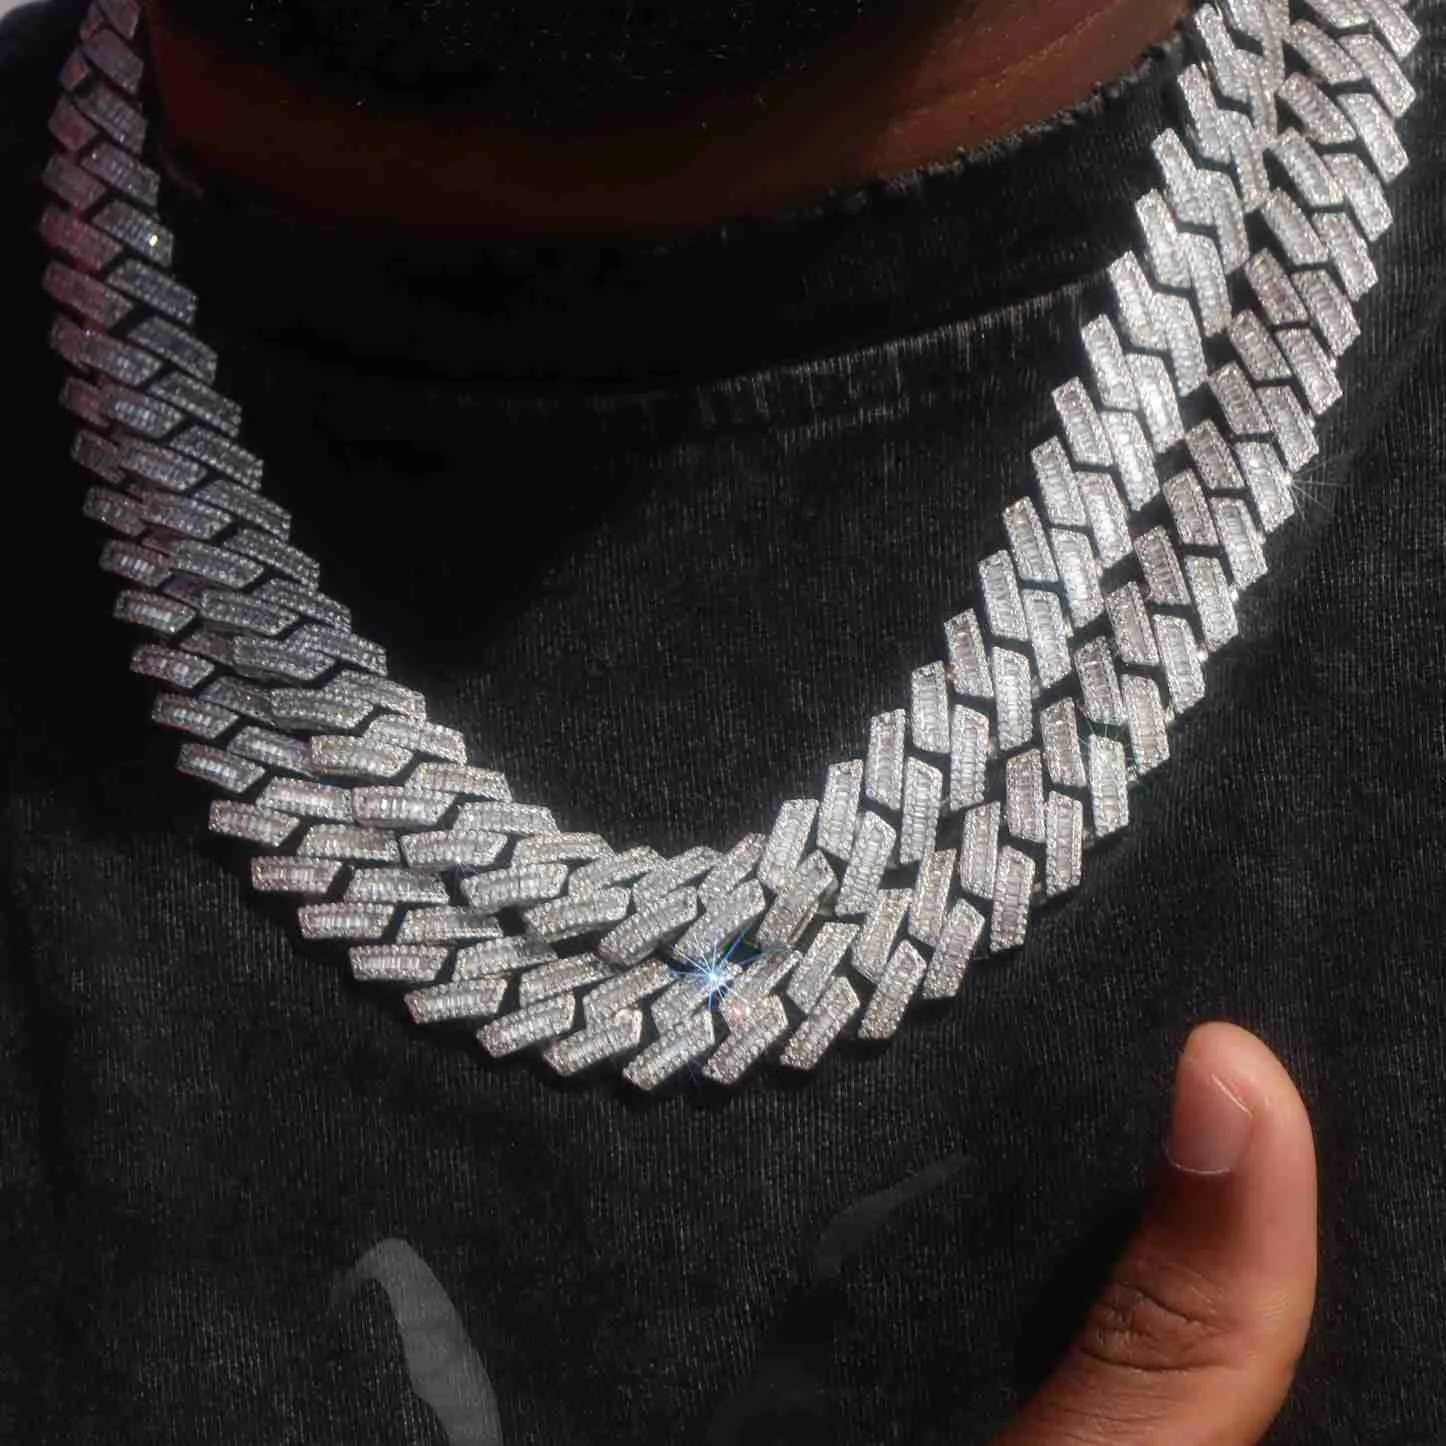 925 Sterling Silver Sieraden Iced Out Custom Cuban Chain Link Hip Hop Ketters Pass Diamond VVS Moissanite hanger heren ketting